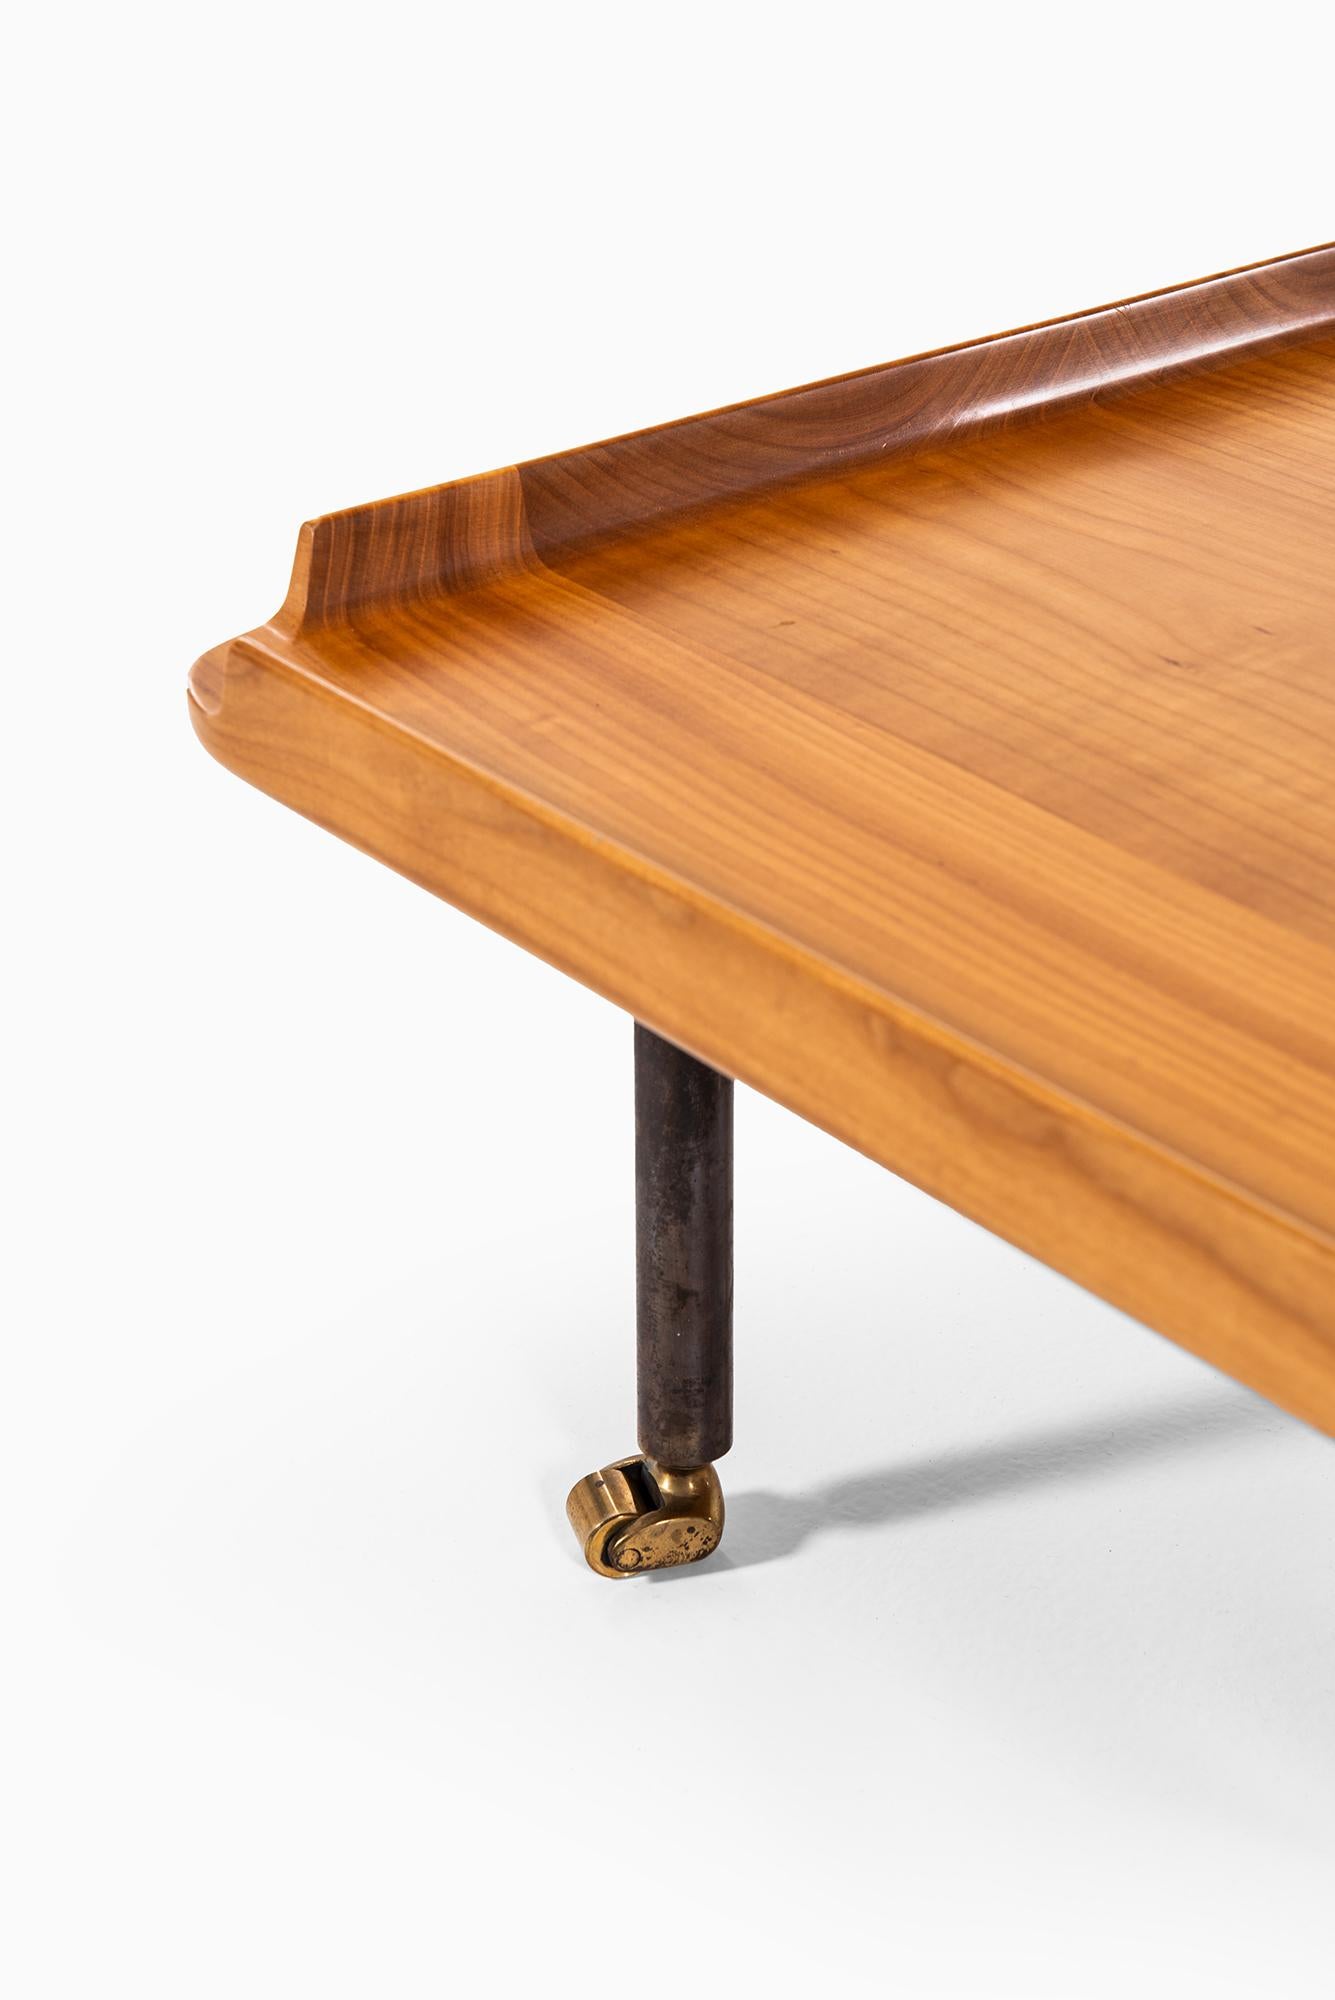 Finn Juhl low table by cabinetmaker Niels Roth Andersen in Denmark In Good Condition For Sale In Limhamn, Skåne län